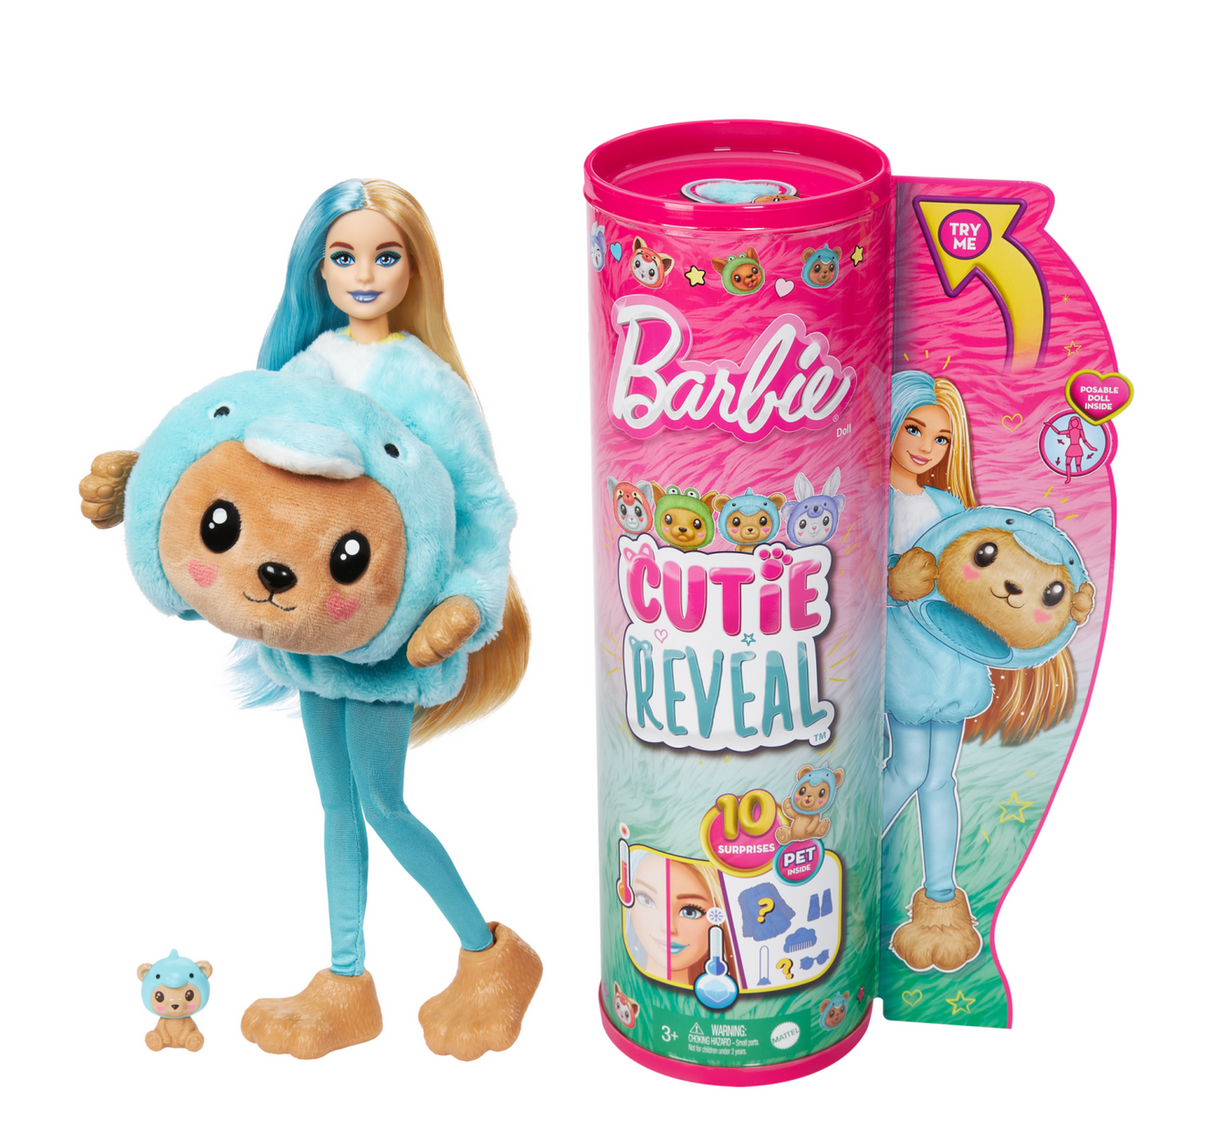 Barbie Cutie Reveal Teddy/Dolphin